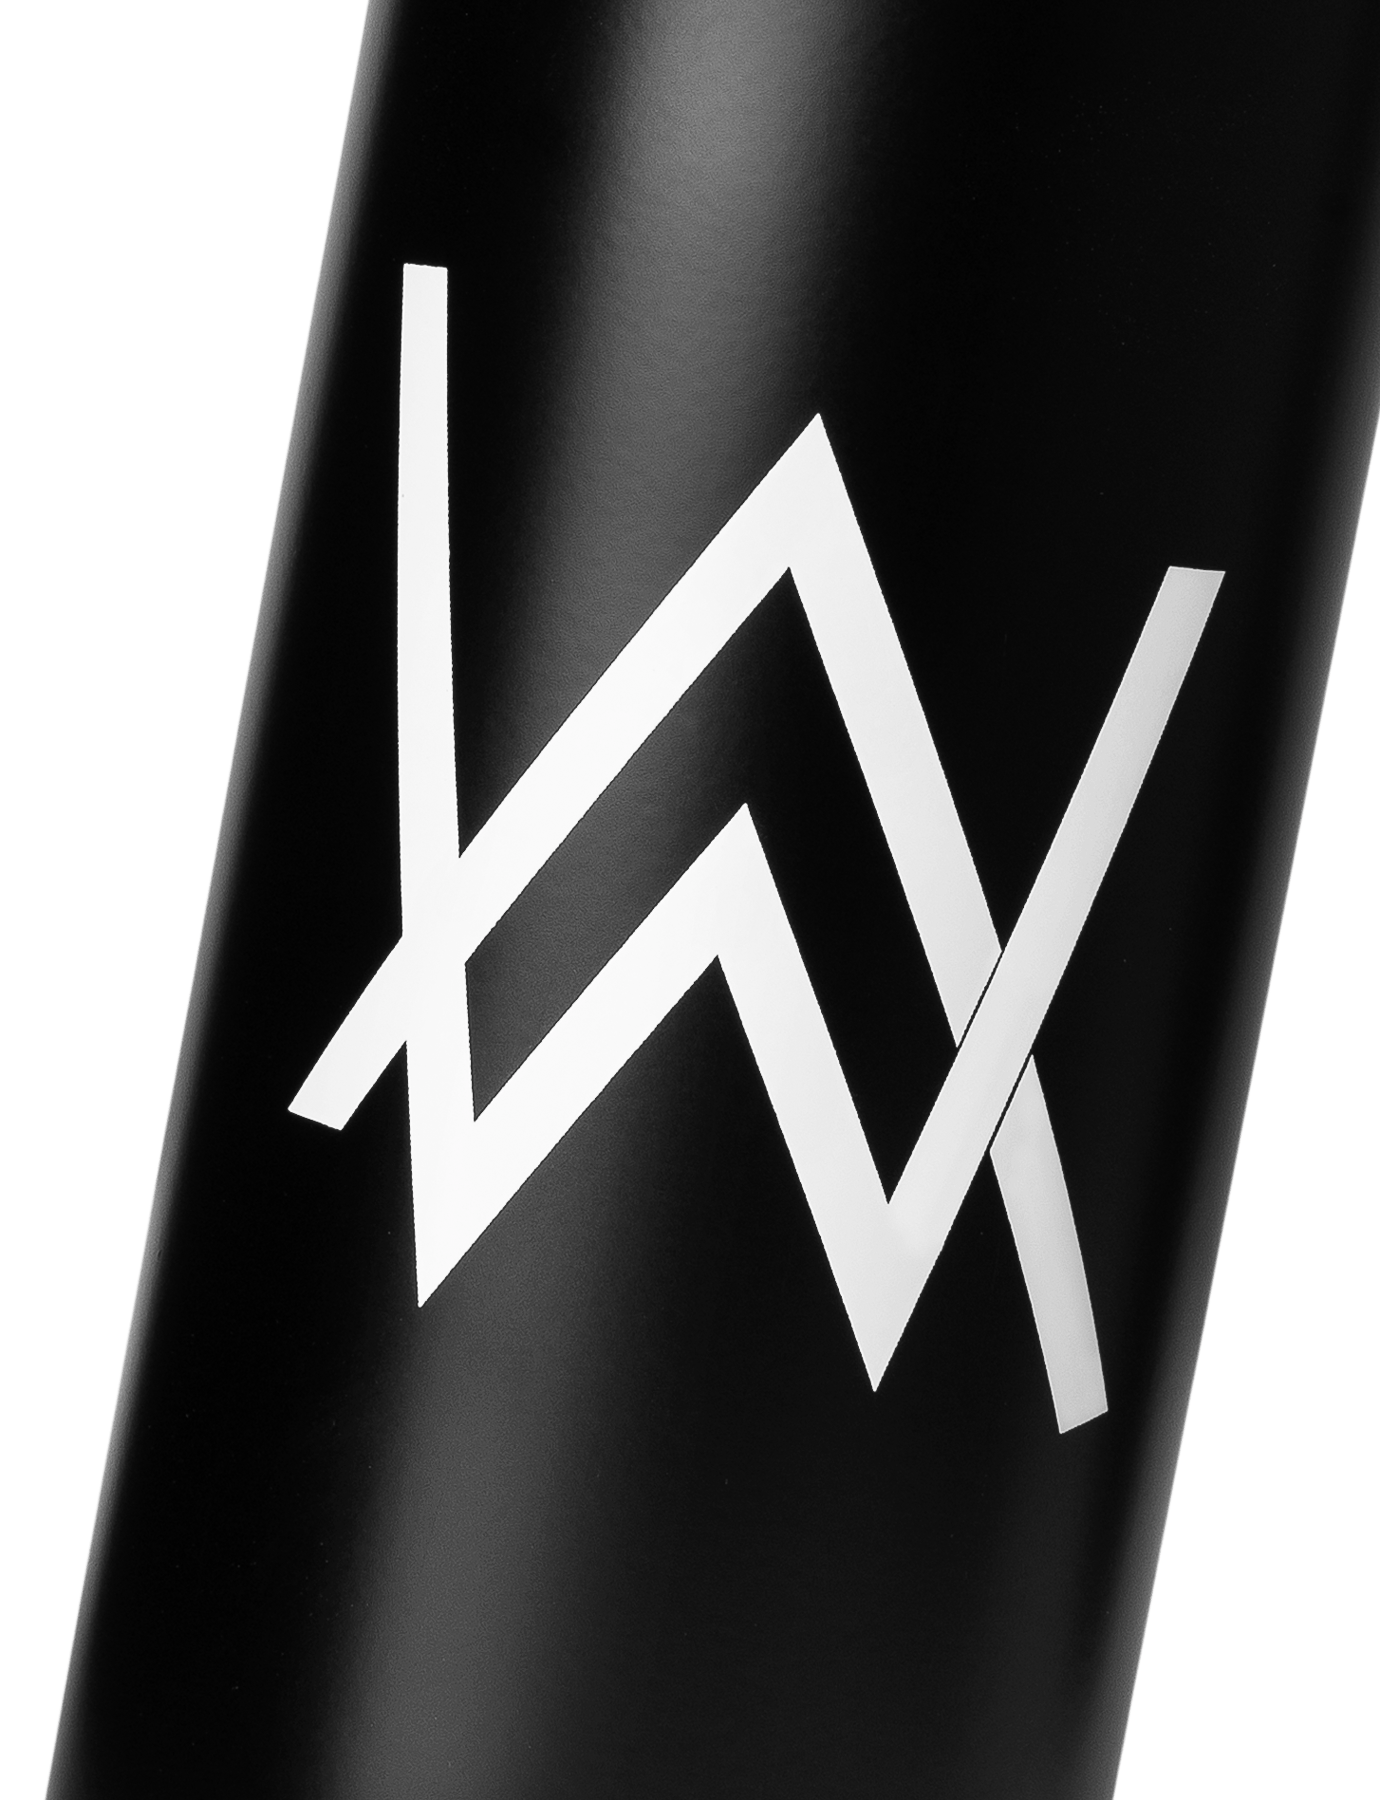 LOGO BOTTLE Bottle Alan Walker Official Merchandise 